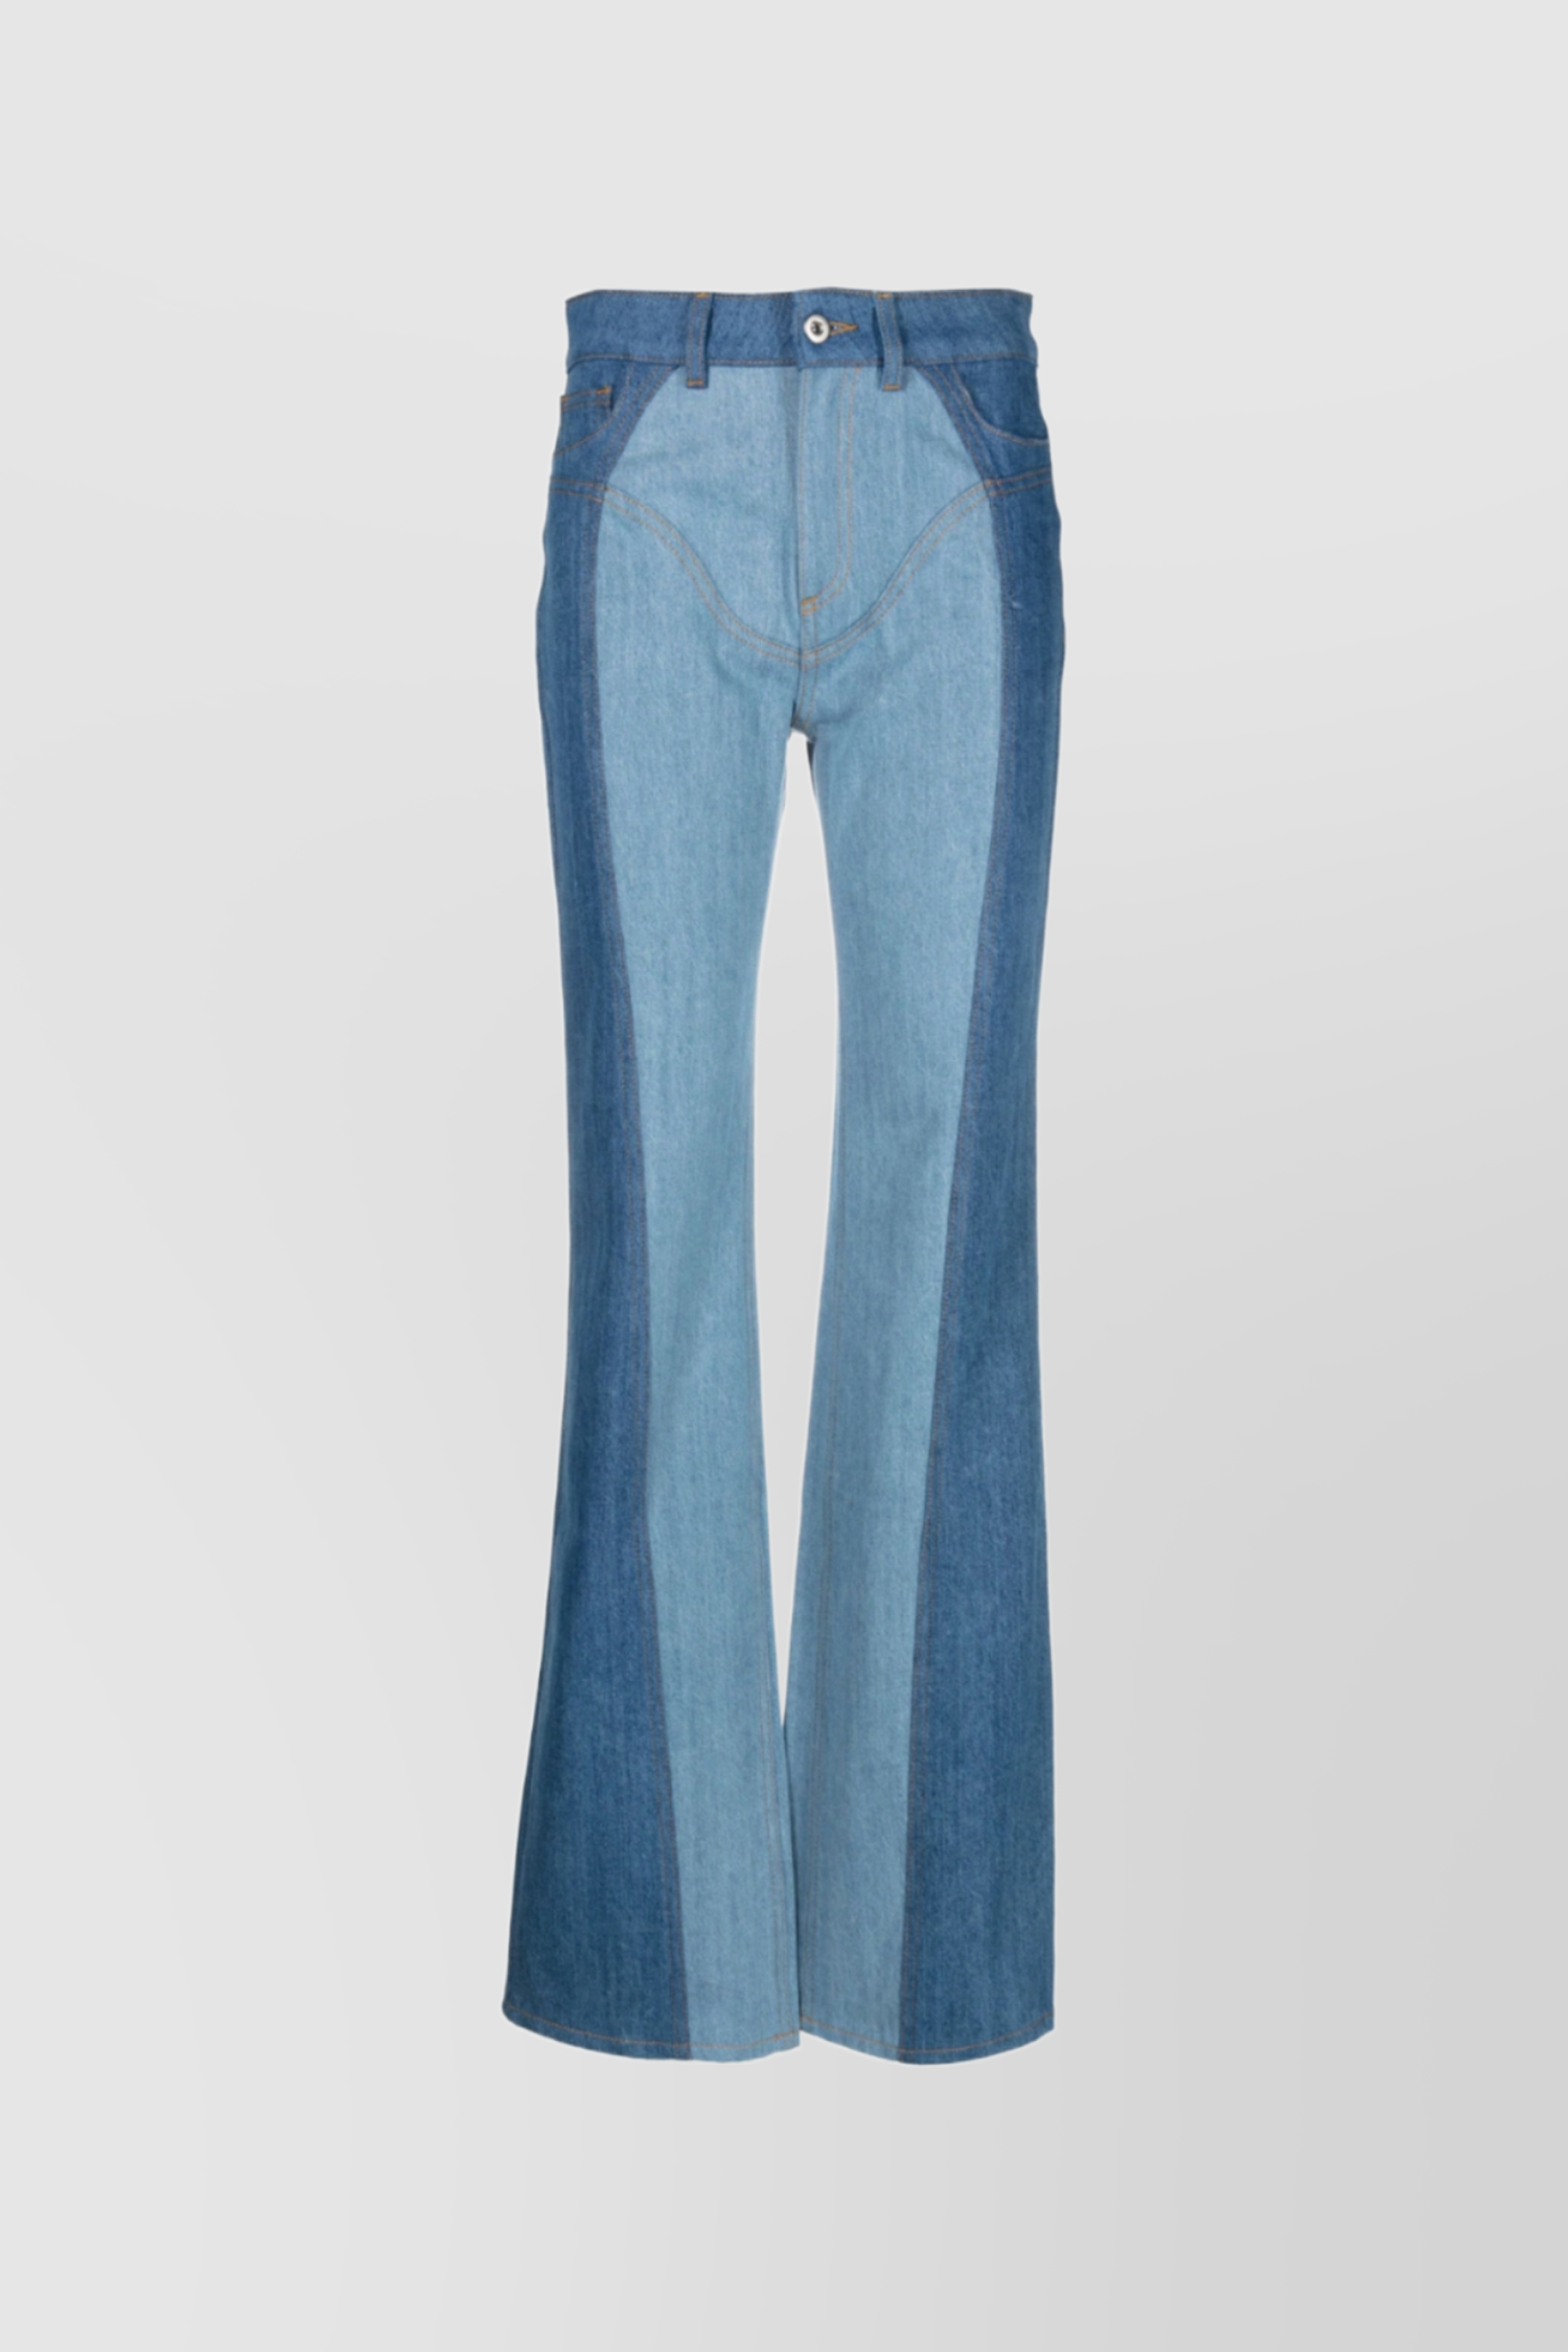 Nensi Dojaka Contrast Wide Flared Denim Jeans In Blue